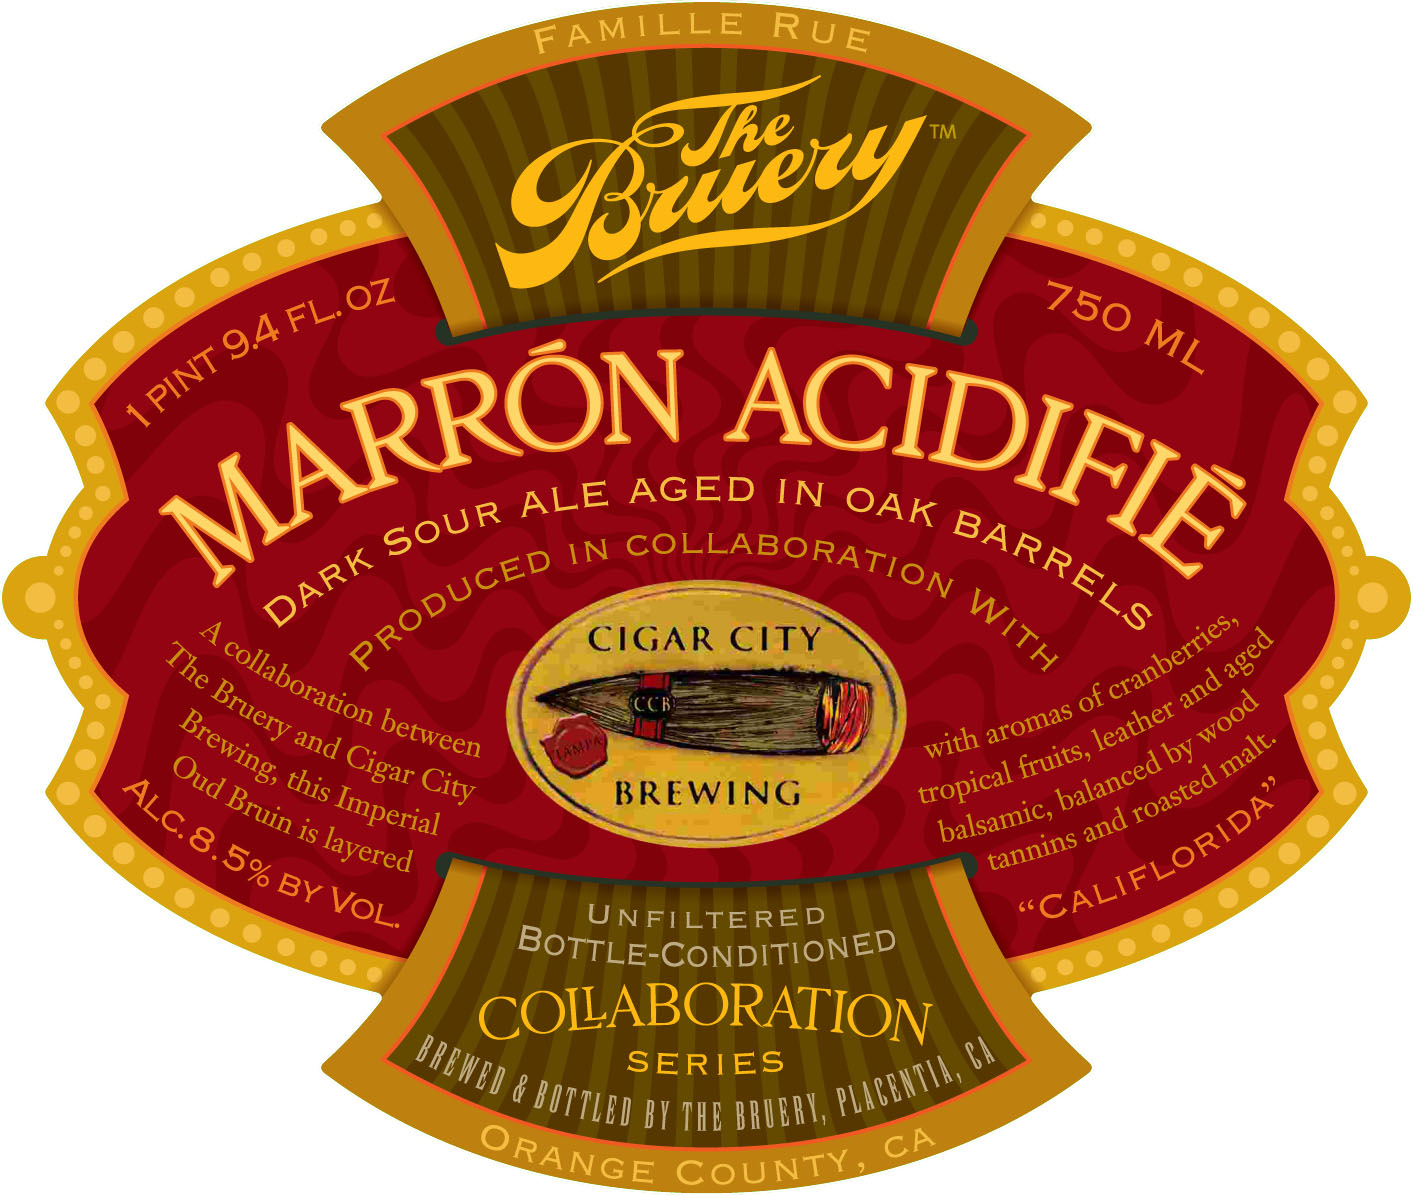 The Bruery - Marron Acidifie